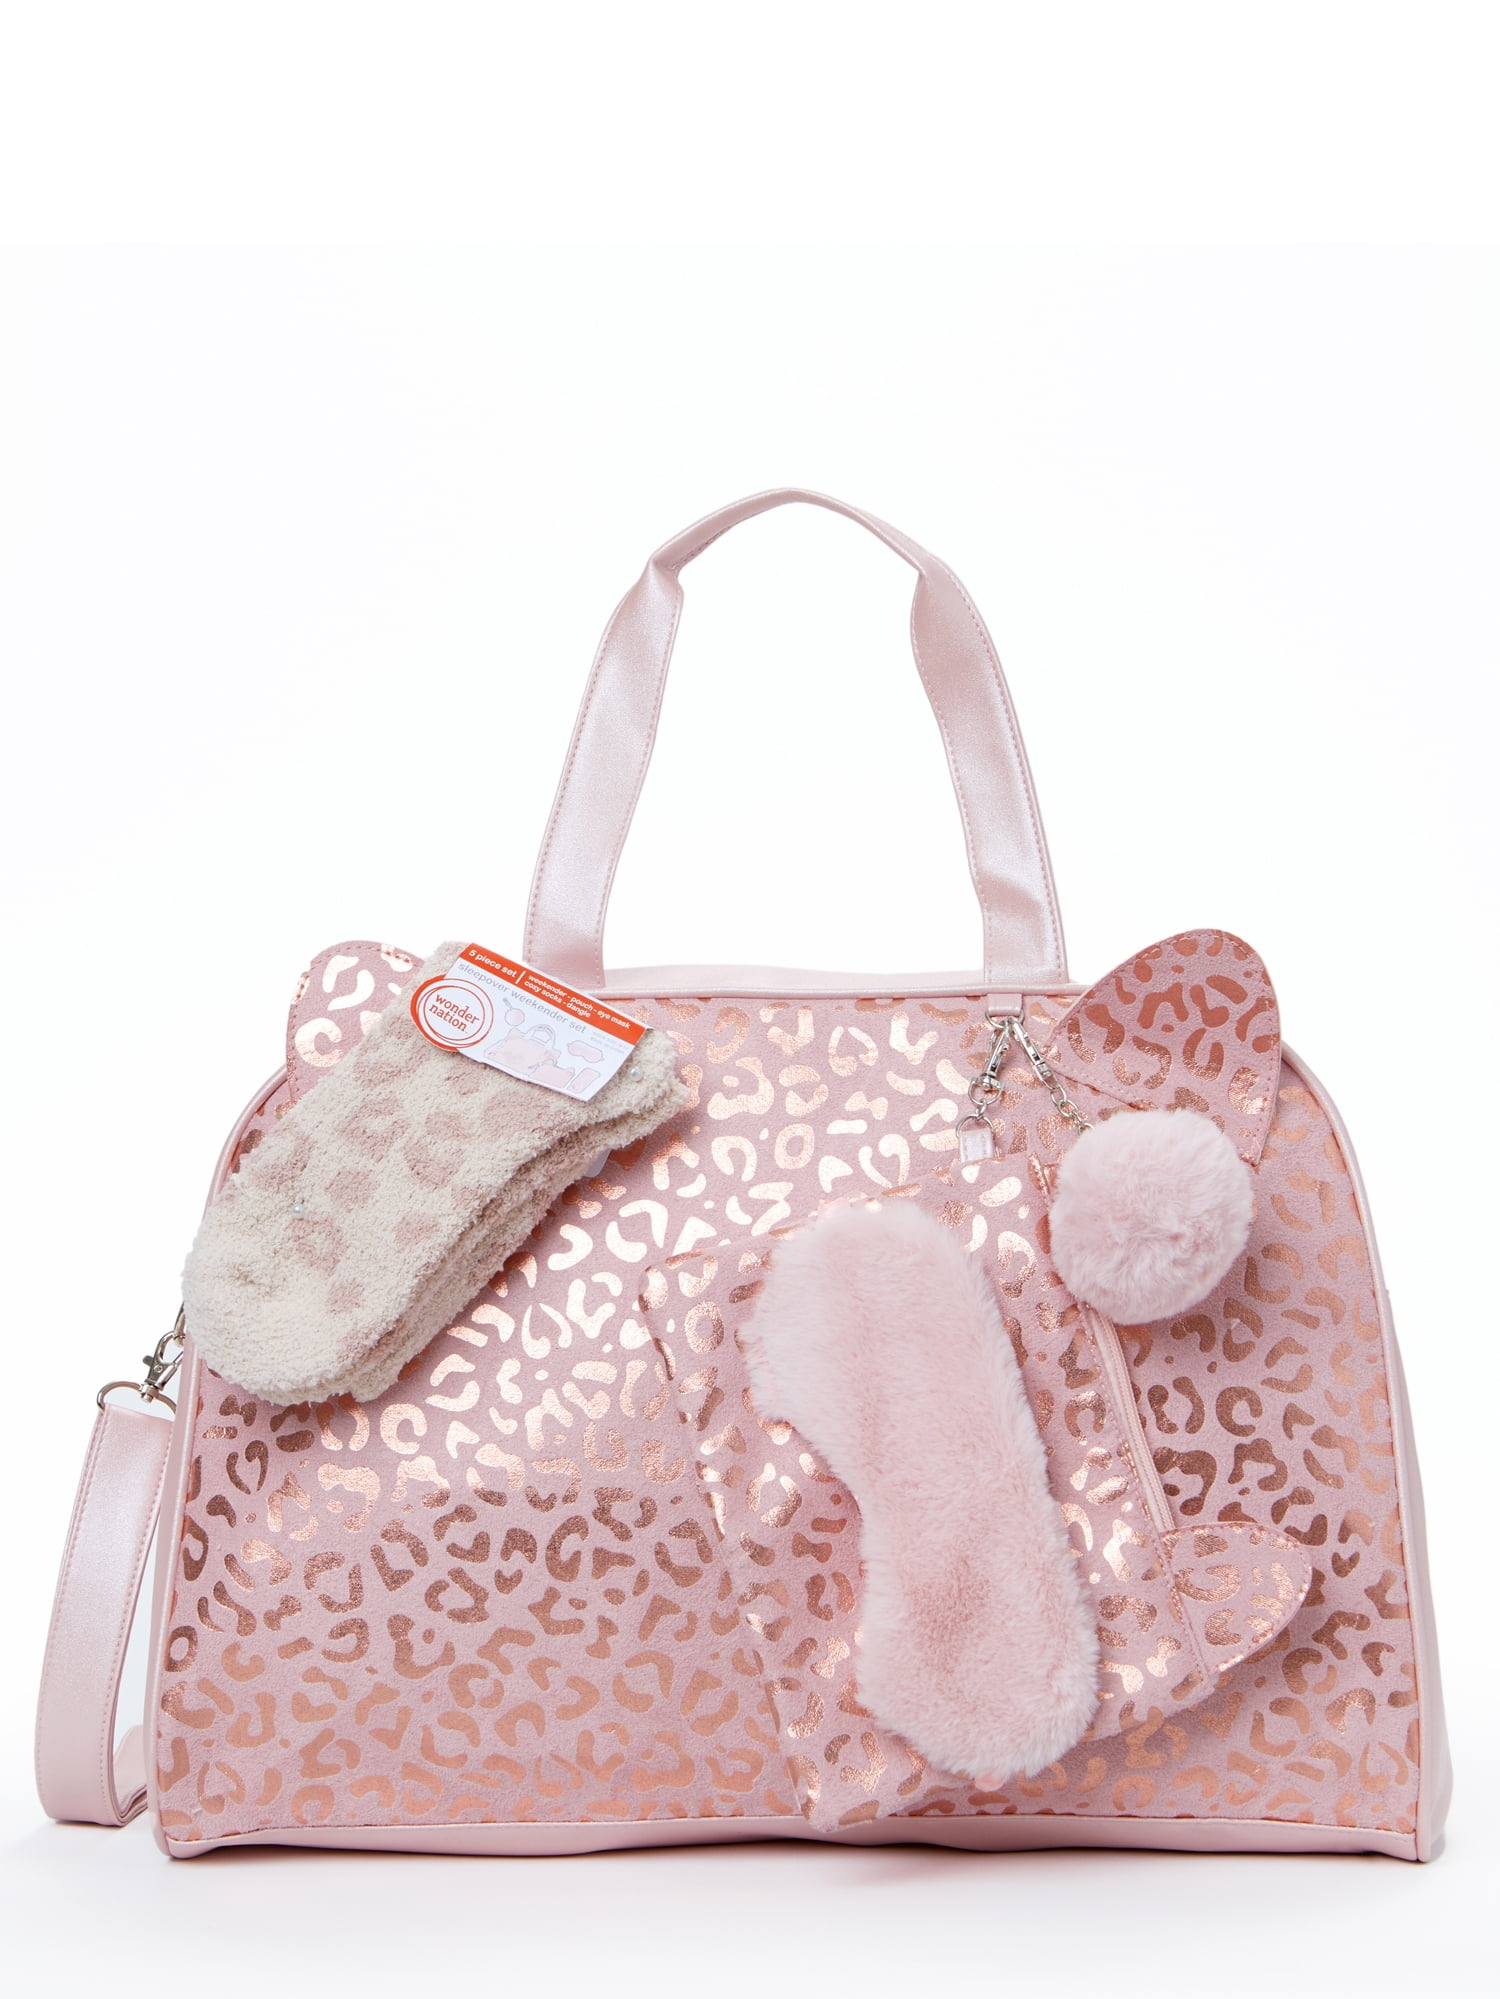 Wonder Nation Girl's Leopard Kitty Weekender Duffle Handbag Set Pink